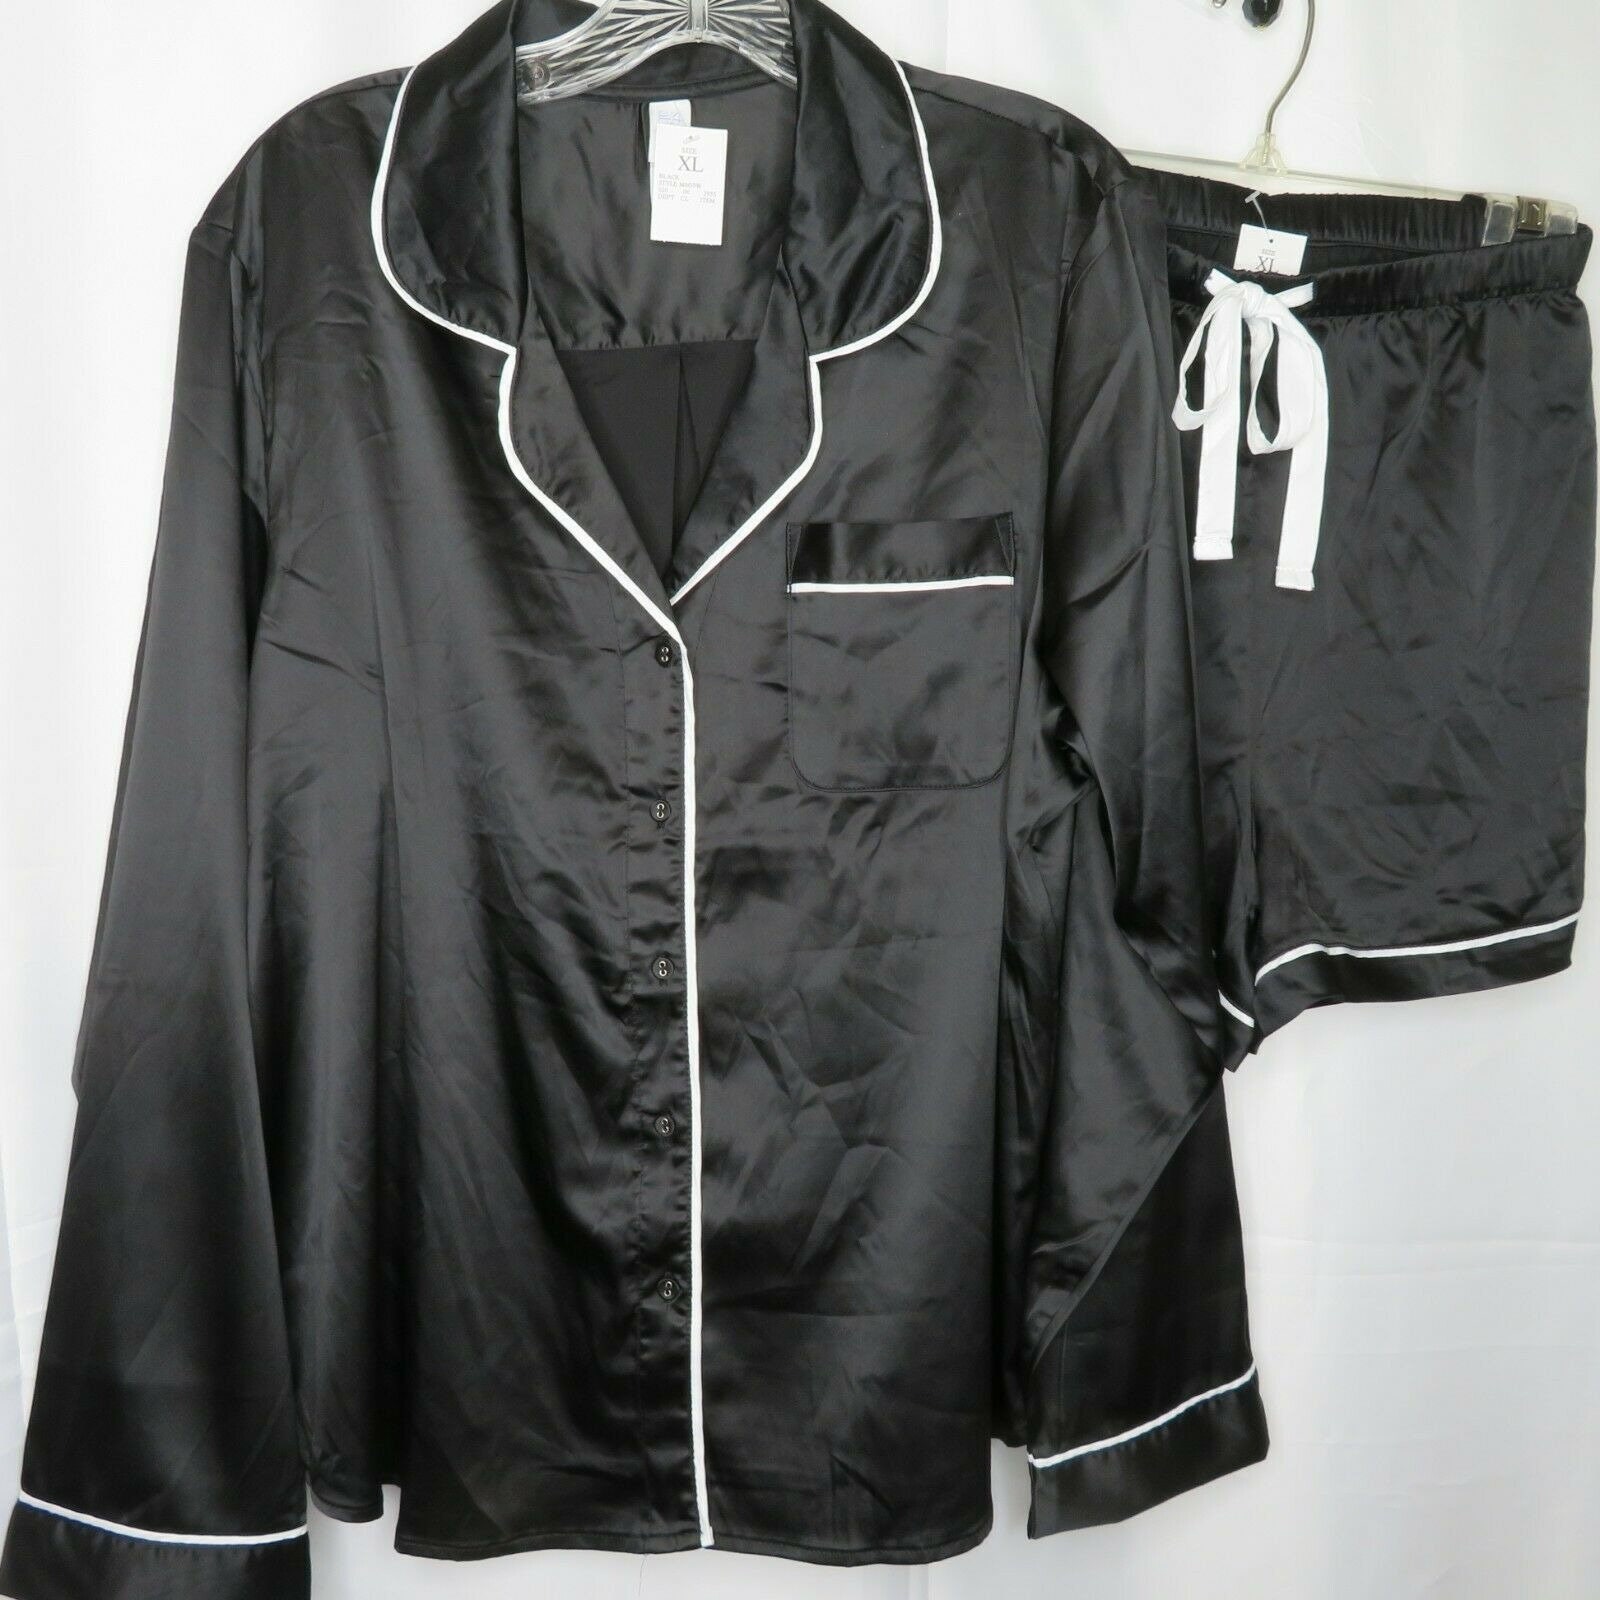 Vintage Star Above Pajamas Set XL Black Shirt Top Short Pants New Old Stock  -  Sweden